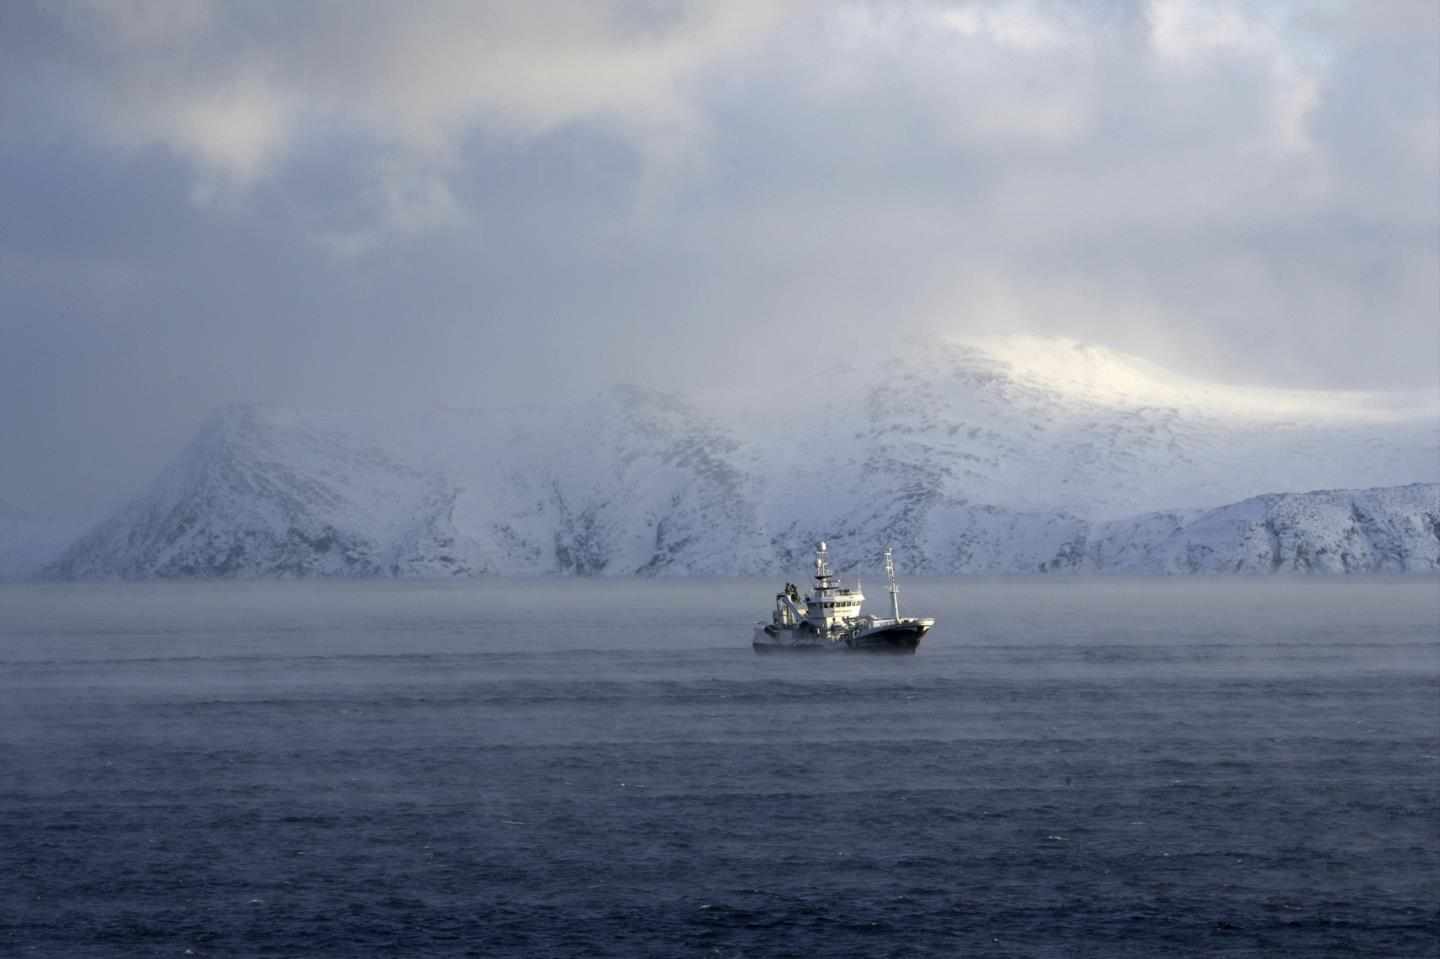 europe oil activists norway arctic